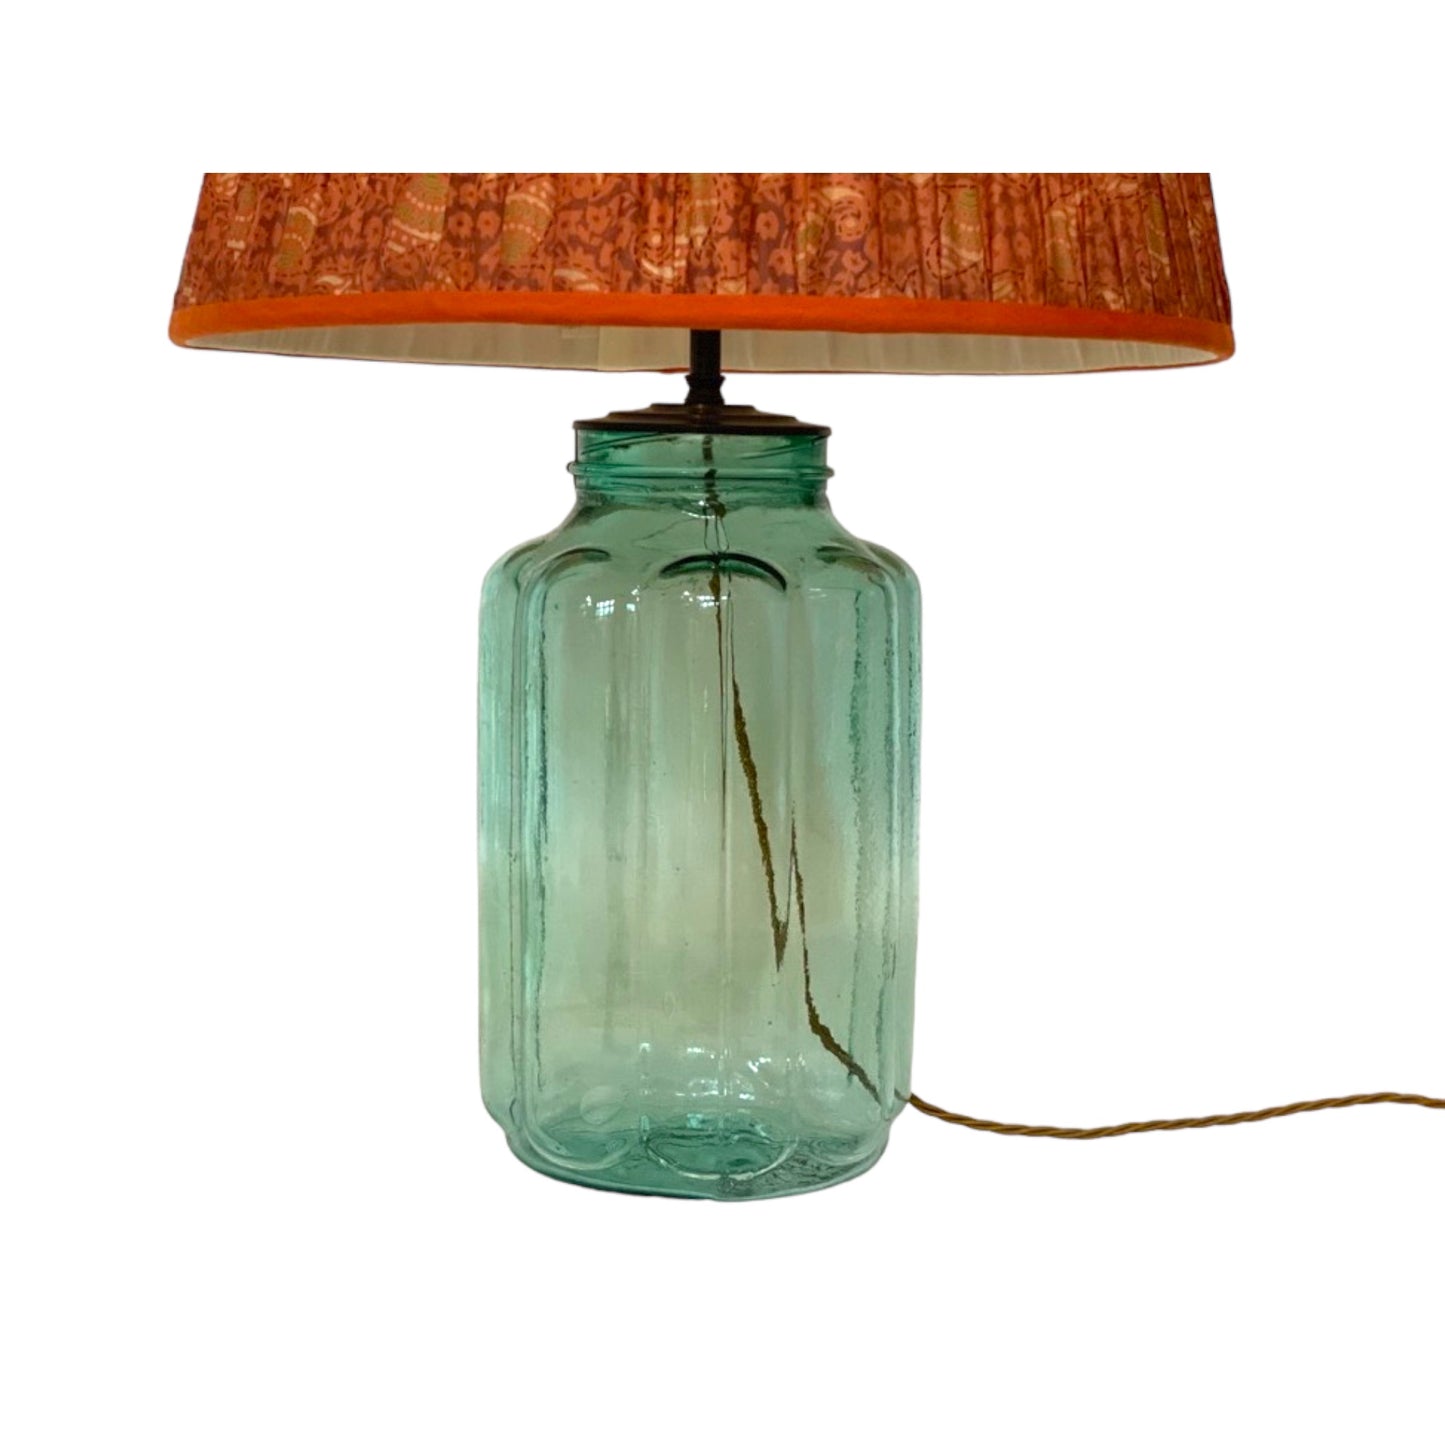 Jelly jar table lamp